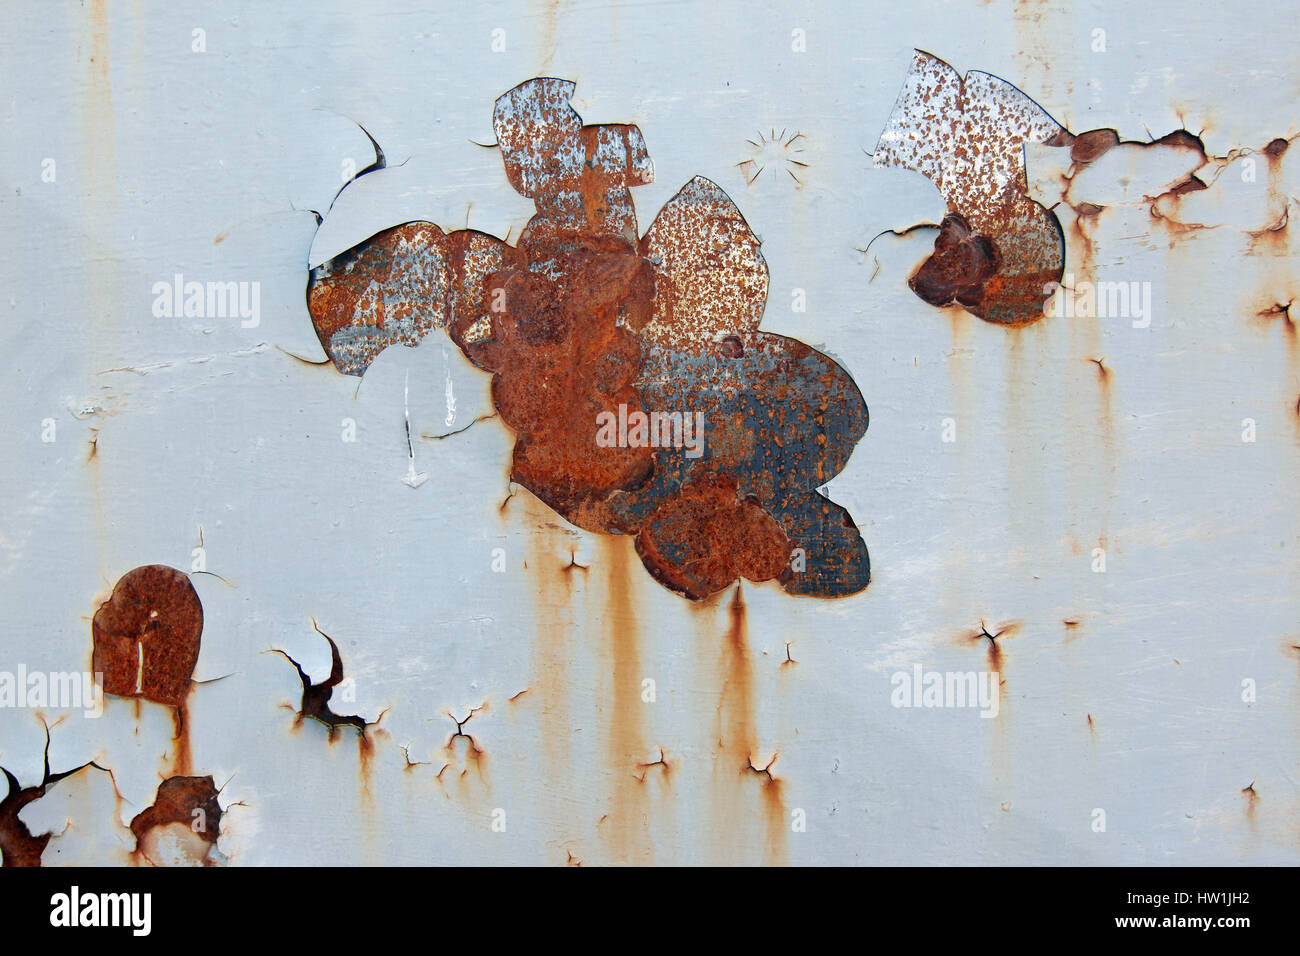 Rusty iron surface with peeling paint - grunge texture Stock Photo